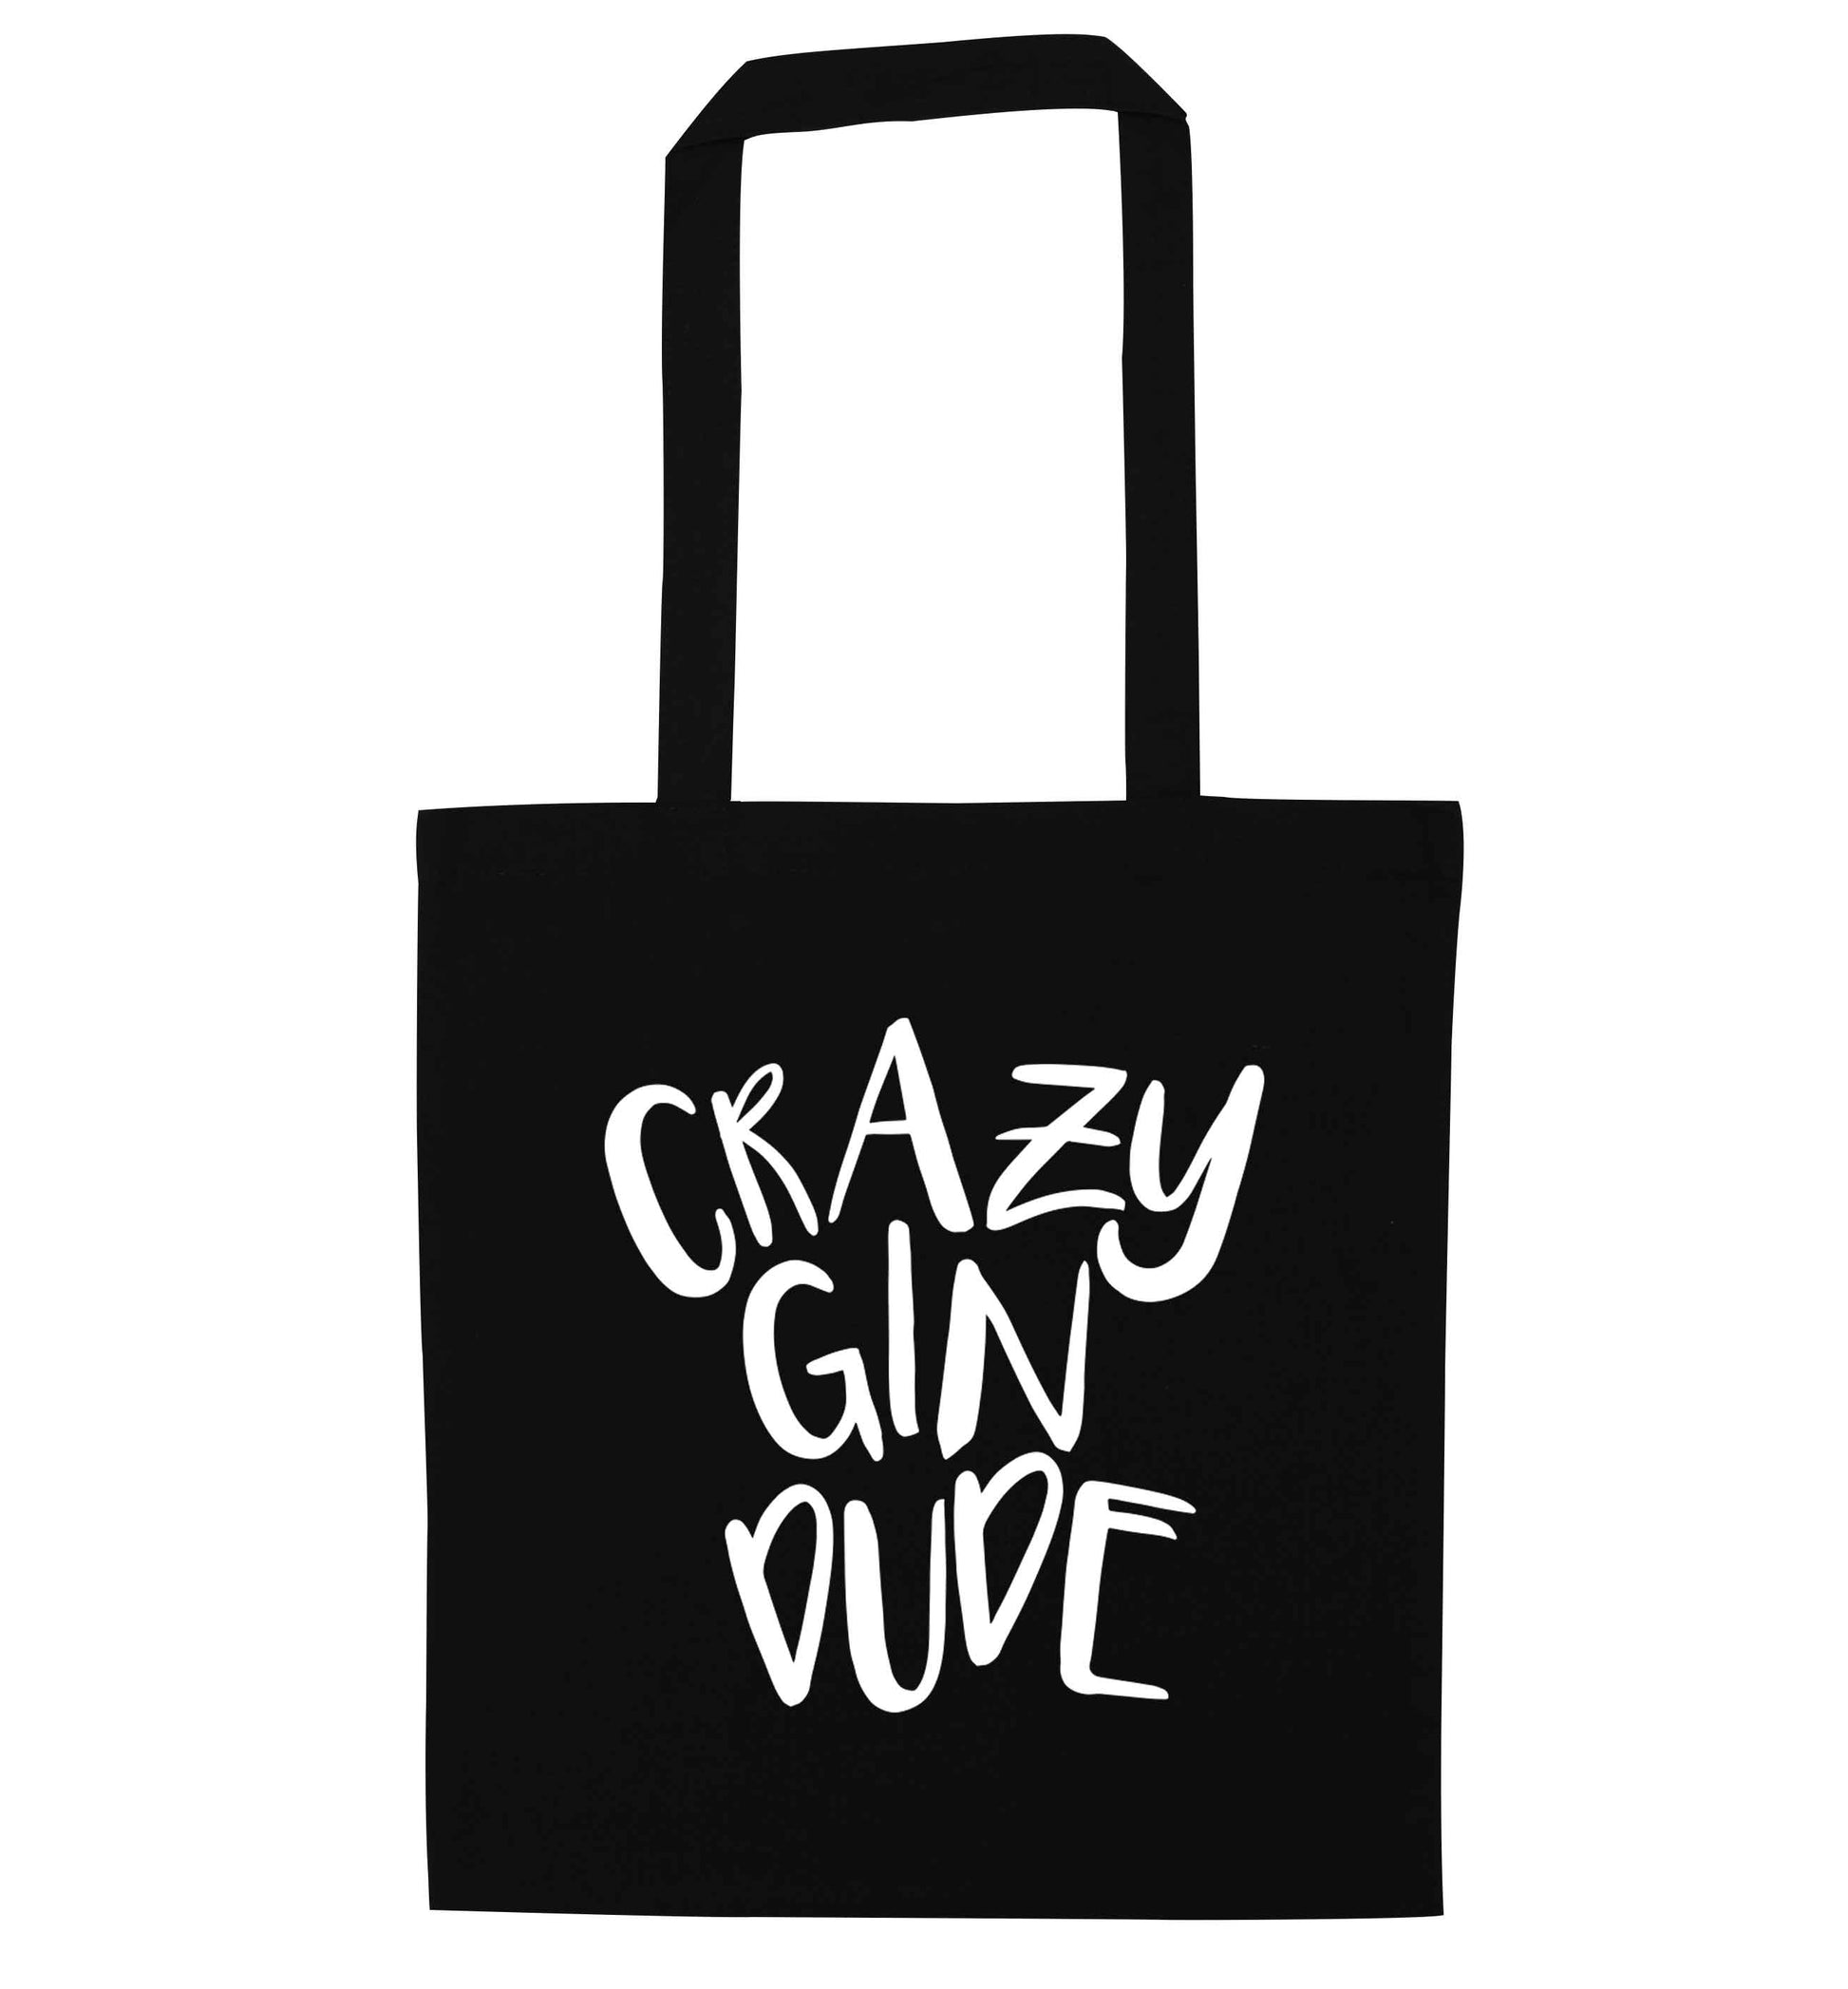 Crazy gin dude black tote bag